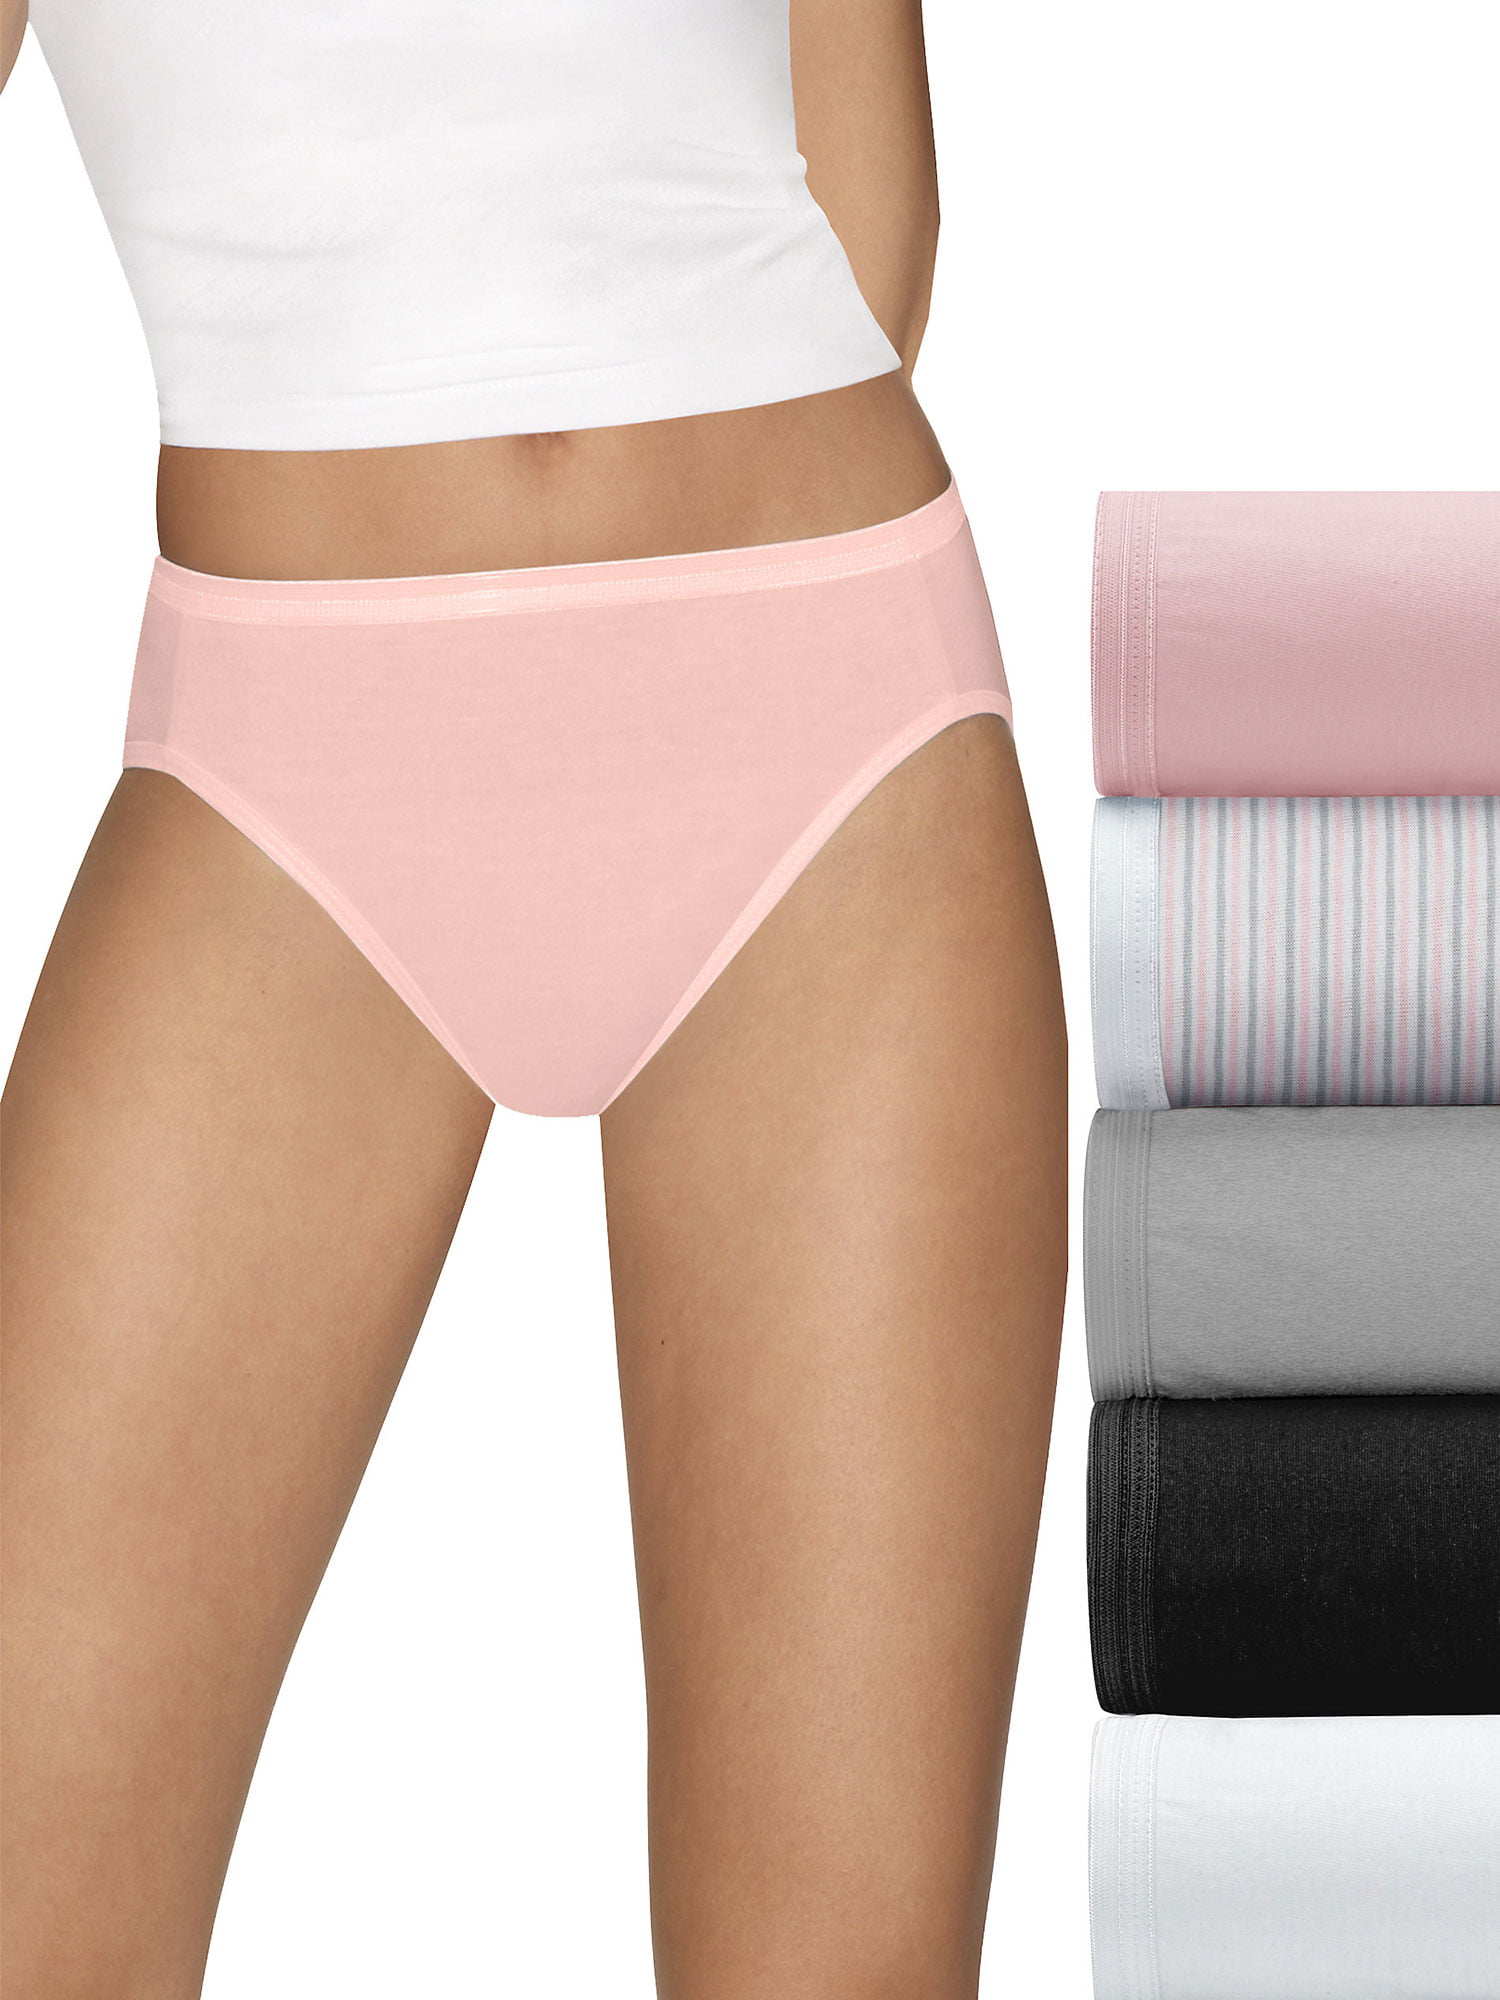 6 White/Pink/Stripe/Grey/Black Assorted Hanes Ultimate Womens Comfort Cotton Bikini Panties 5-Pack